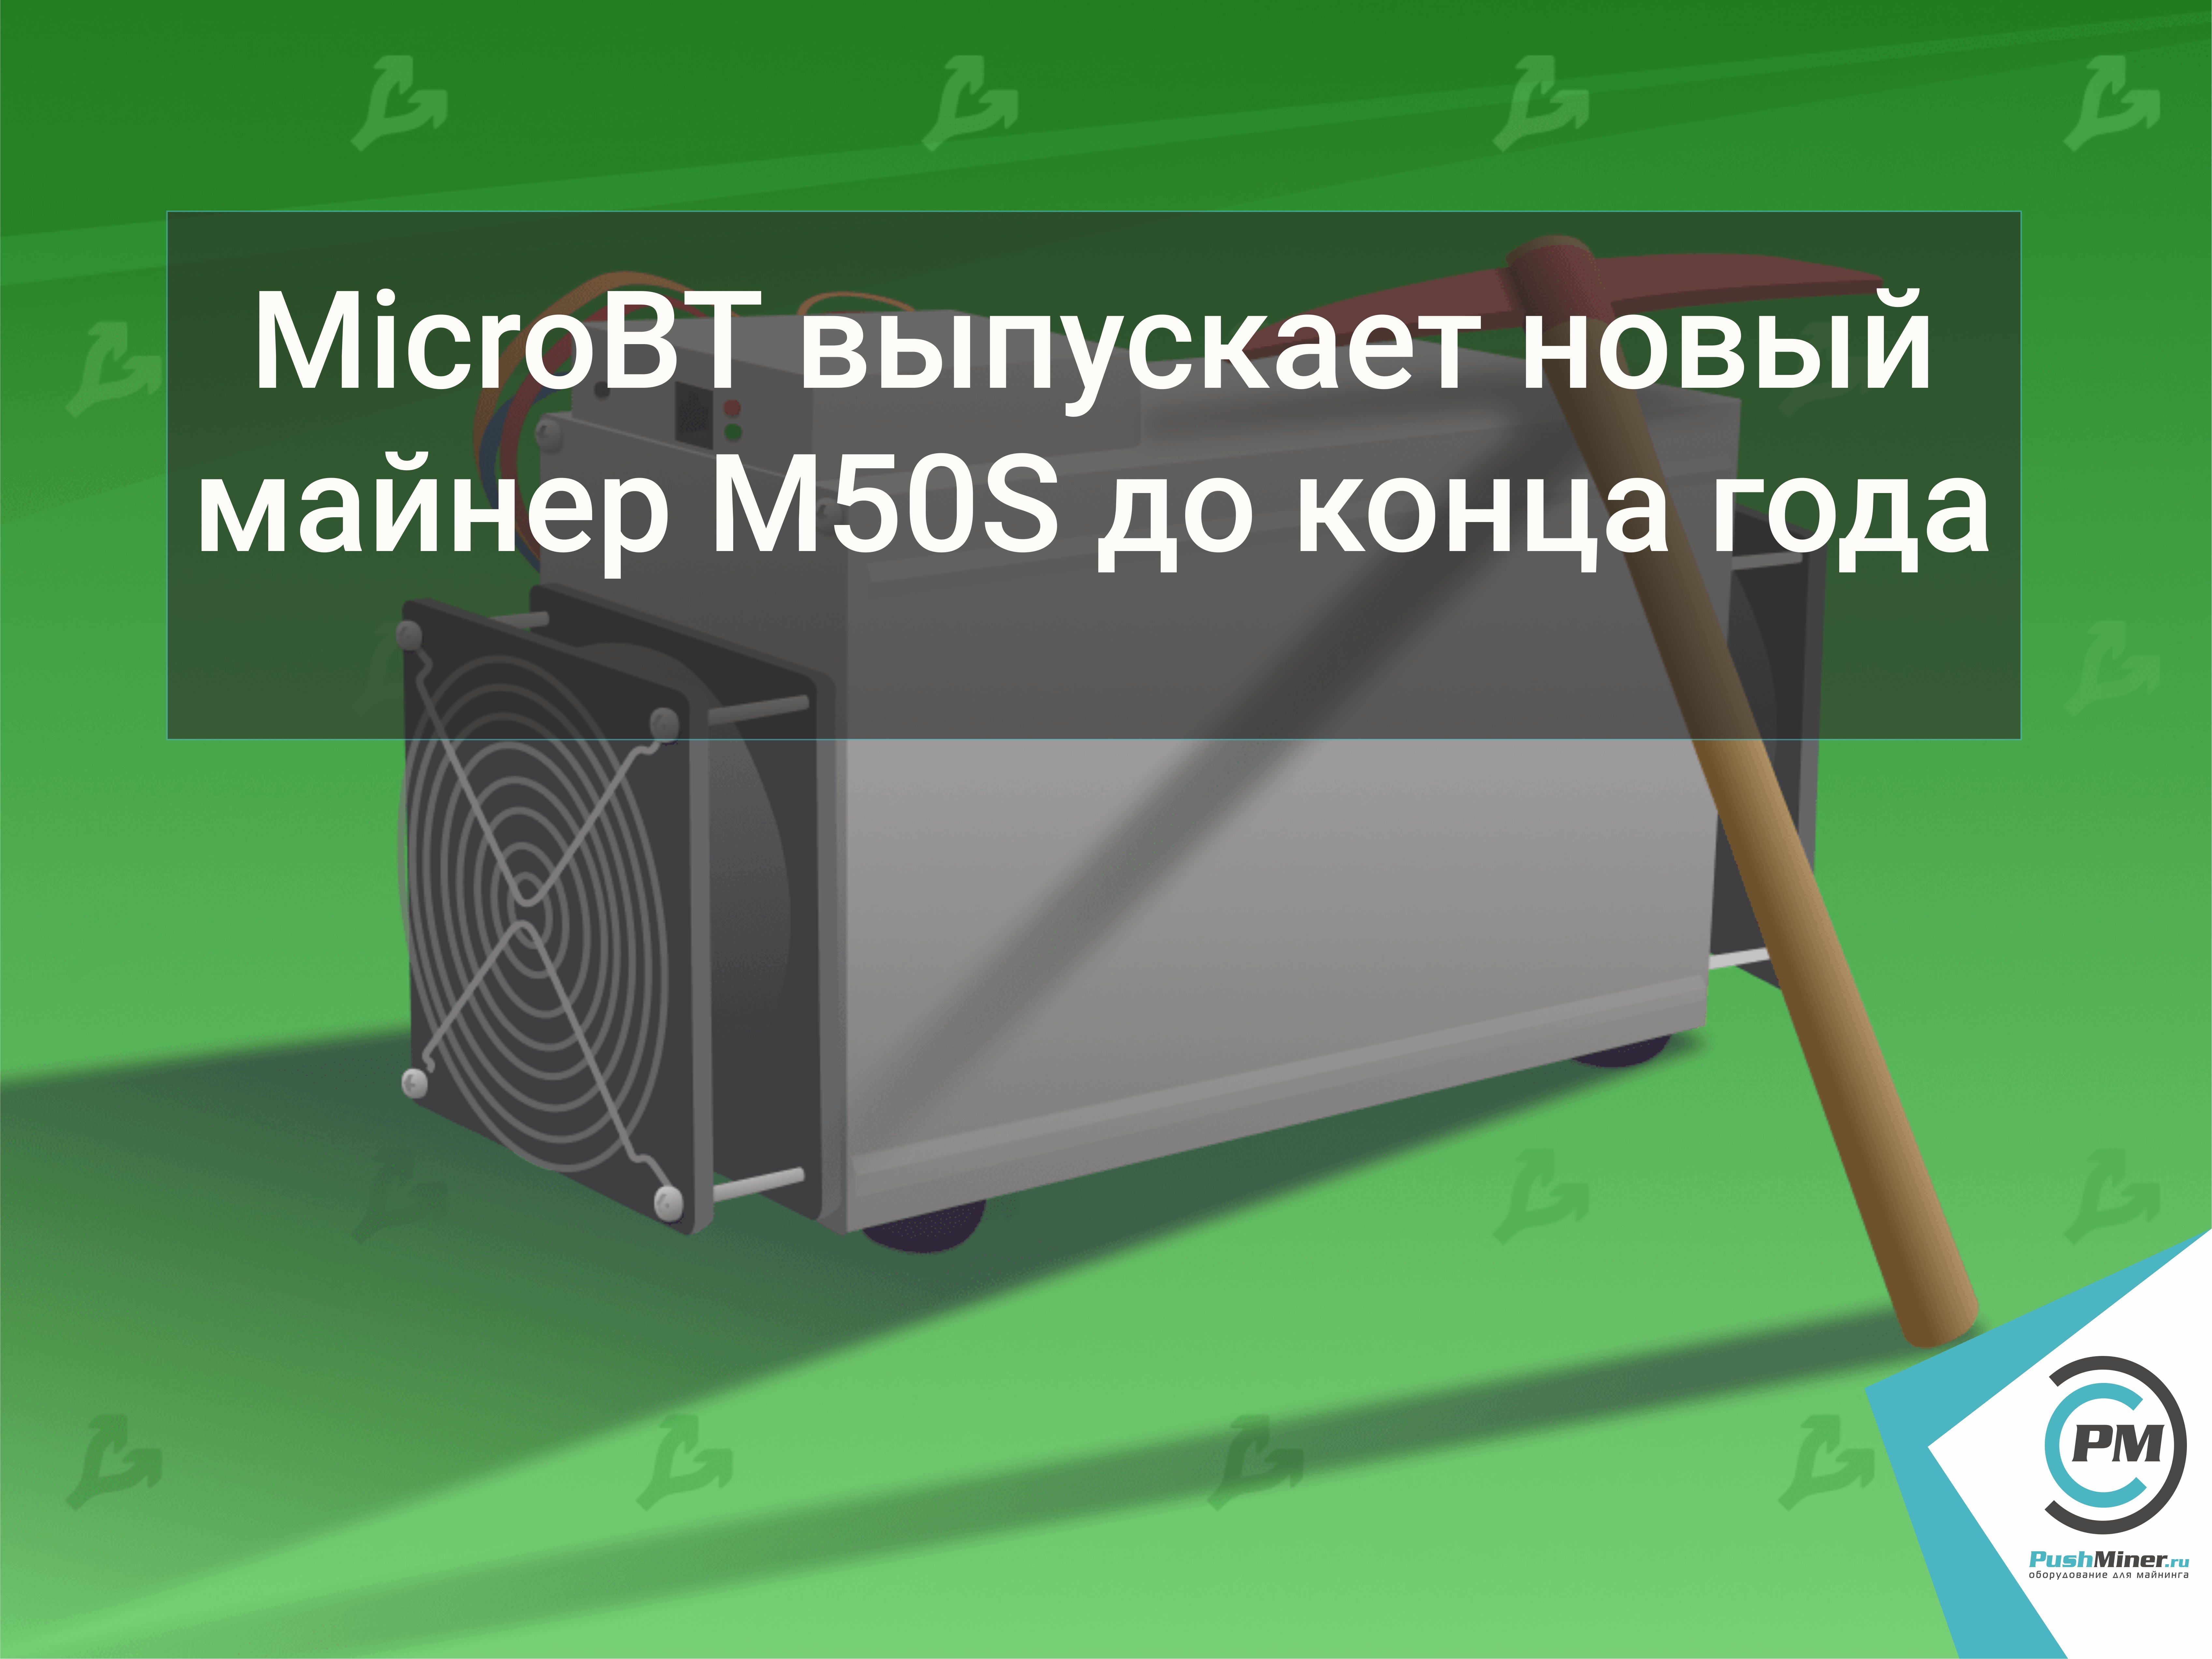 MicroBT выпускает новый майнер M50S до конца года